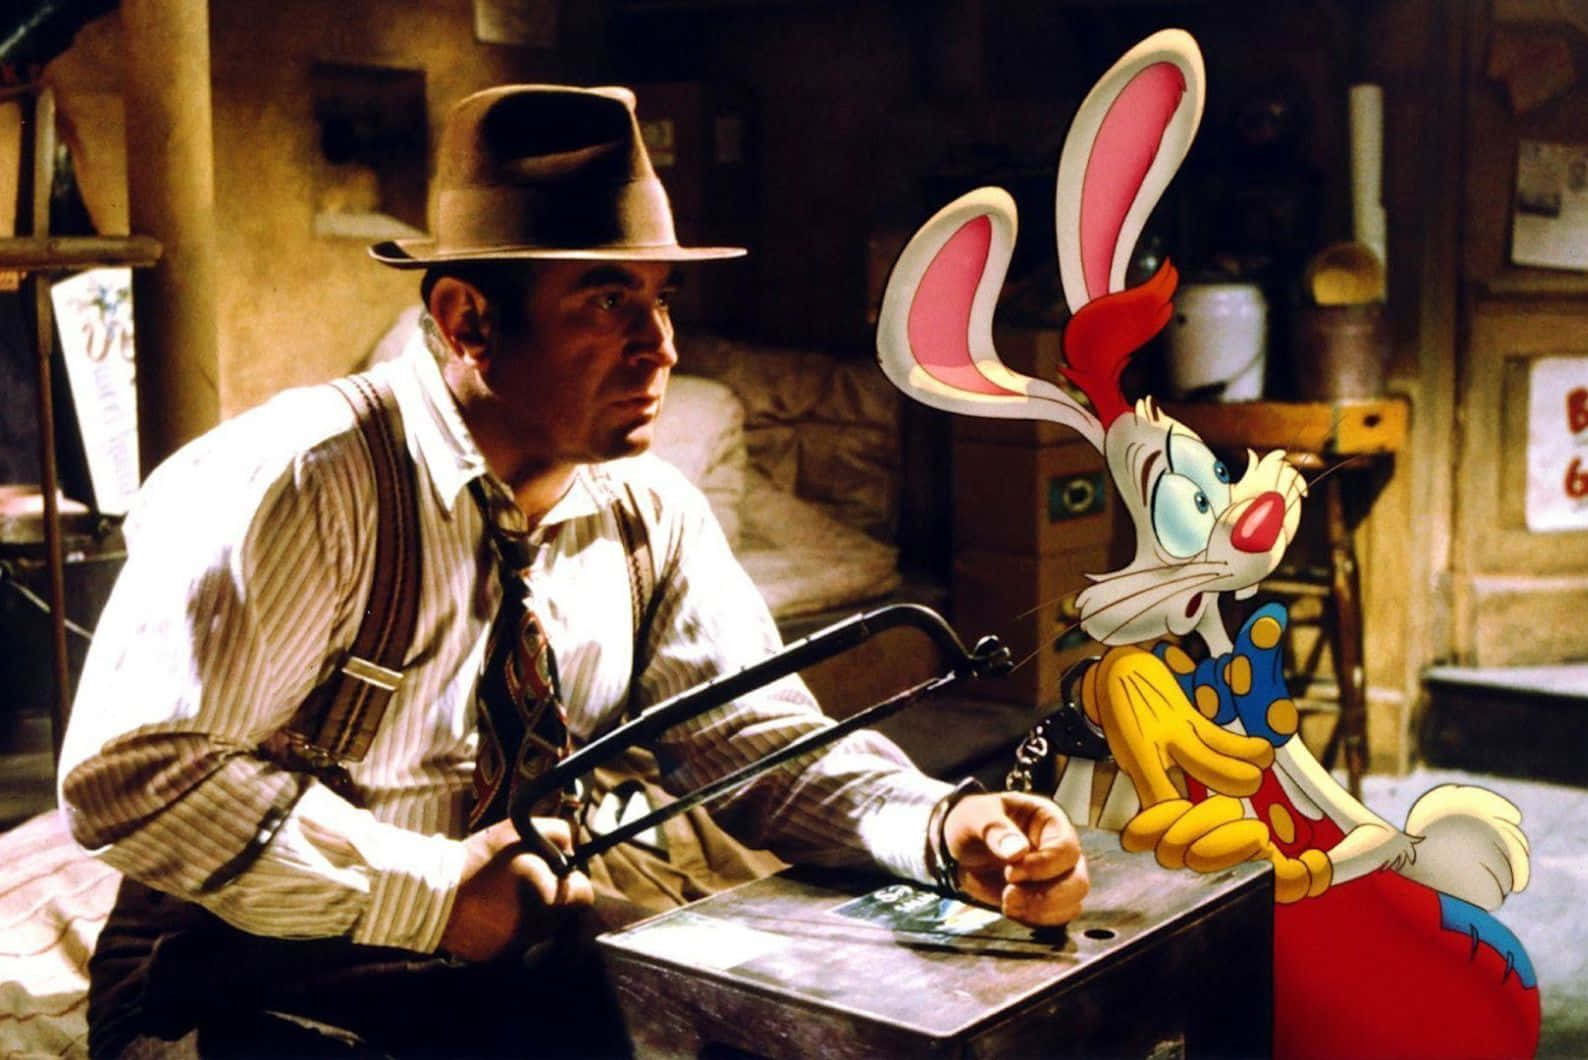 Detectiveand Roger Rabbit